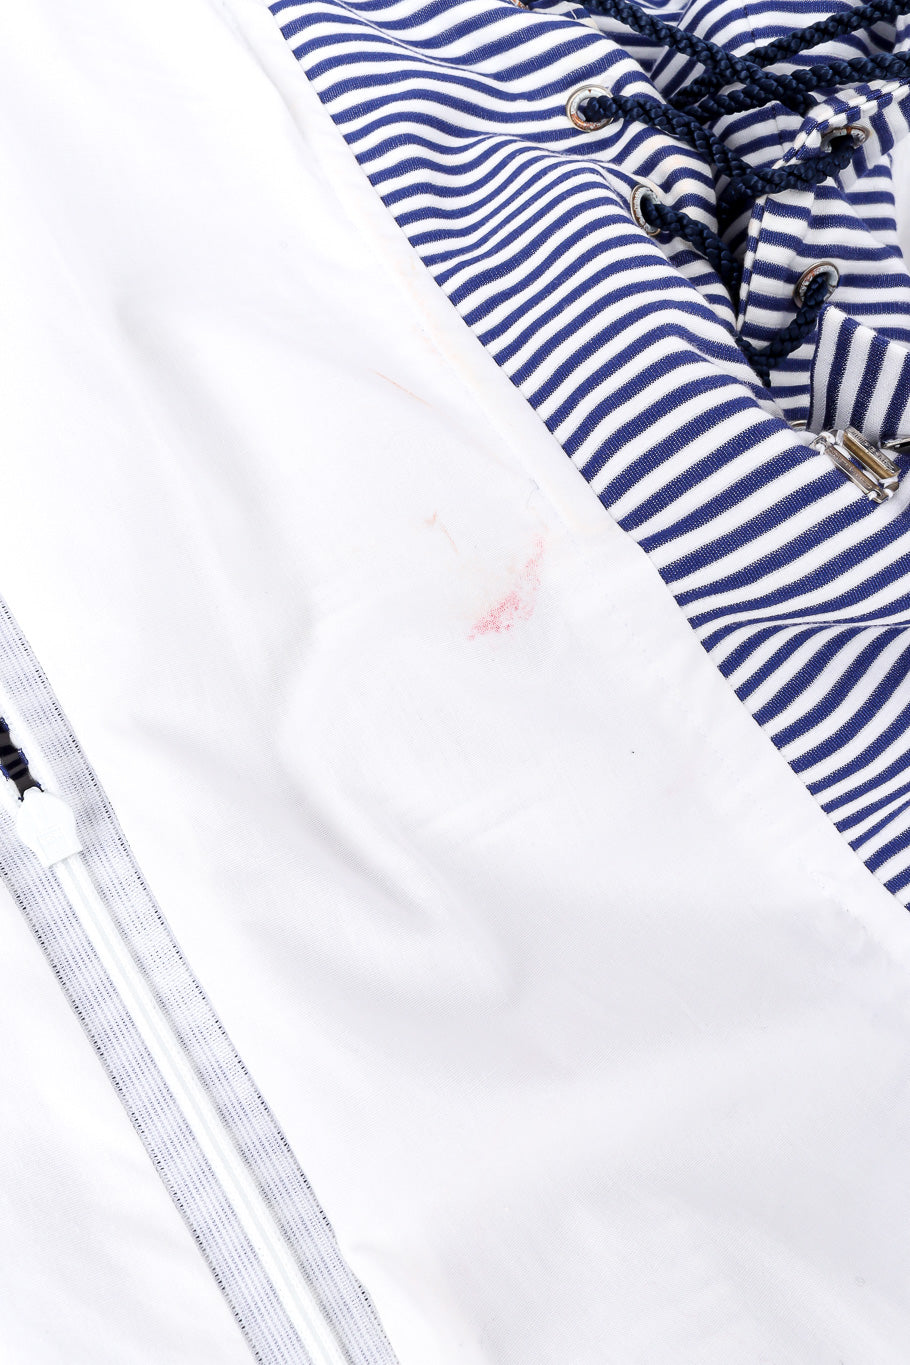 Vintage Yves Saint Laurent Sailor Stripe Corset Dress stain in lining @recessla